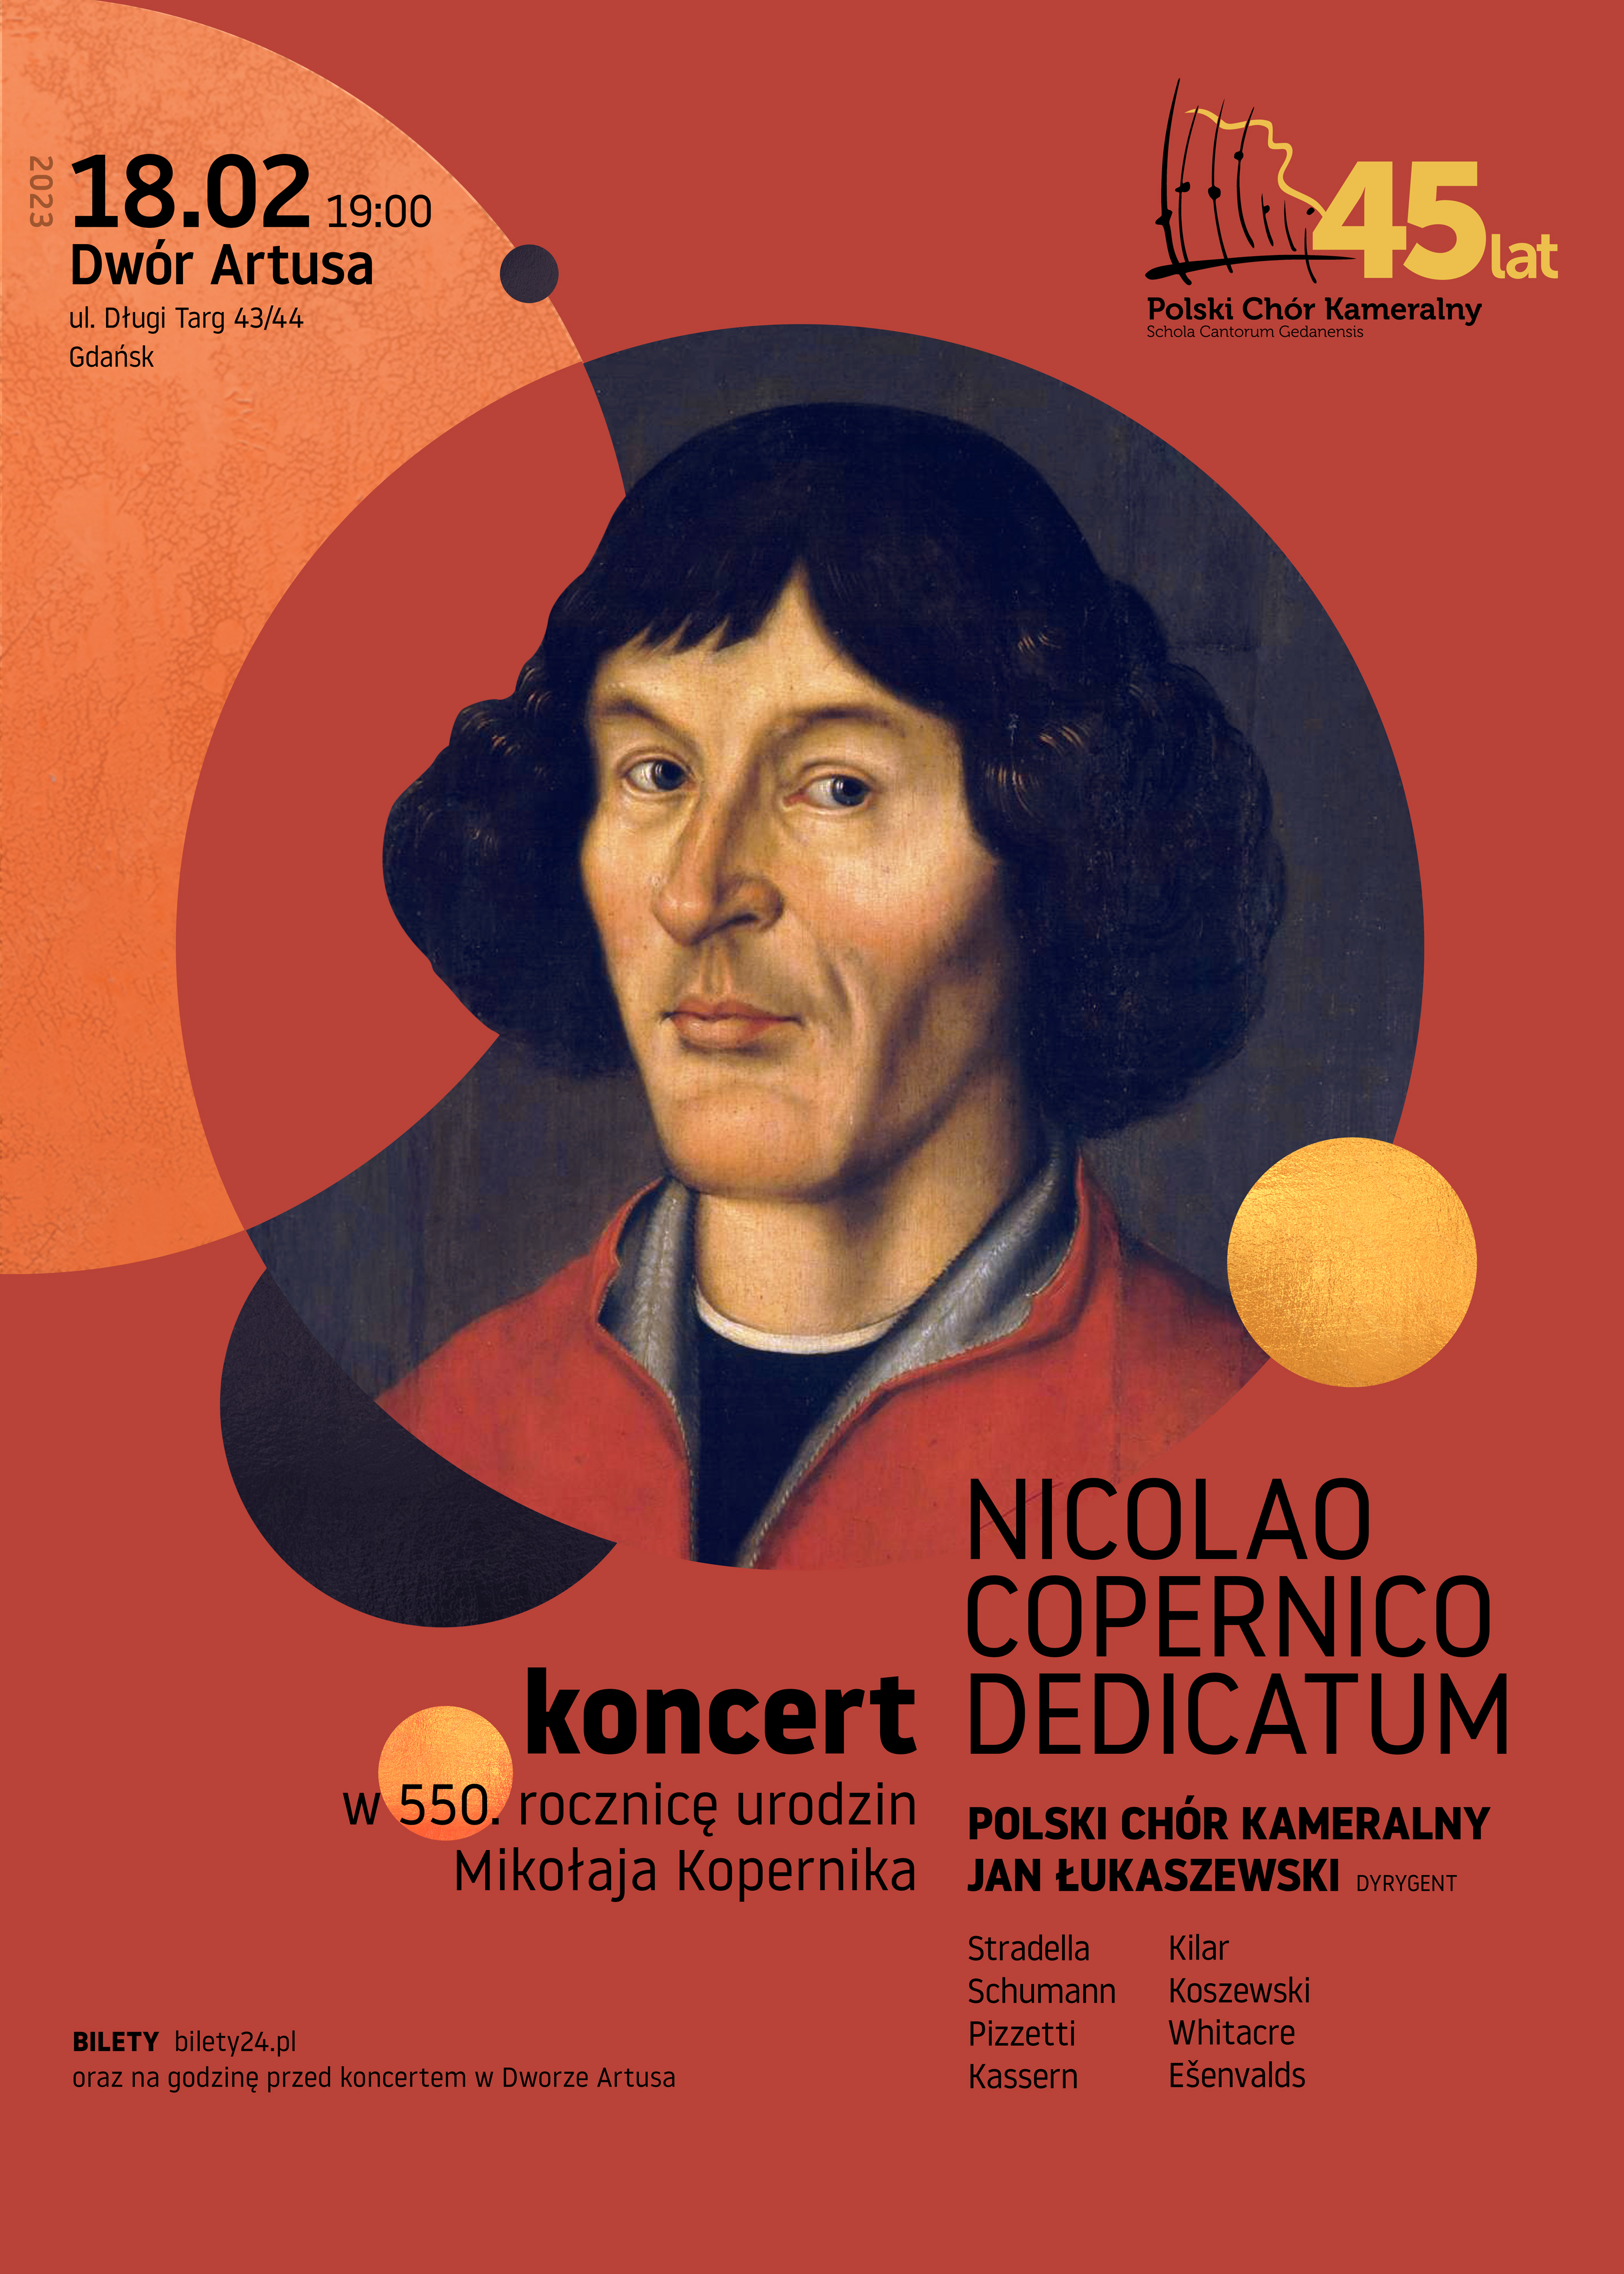 NICOLAO COPERNICO DEDICATUM Concert on the 550th Anniversary of the Birth of Nicolaus Copernicus | Gdańsk